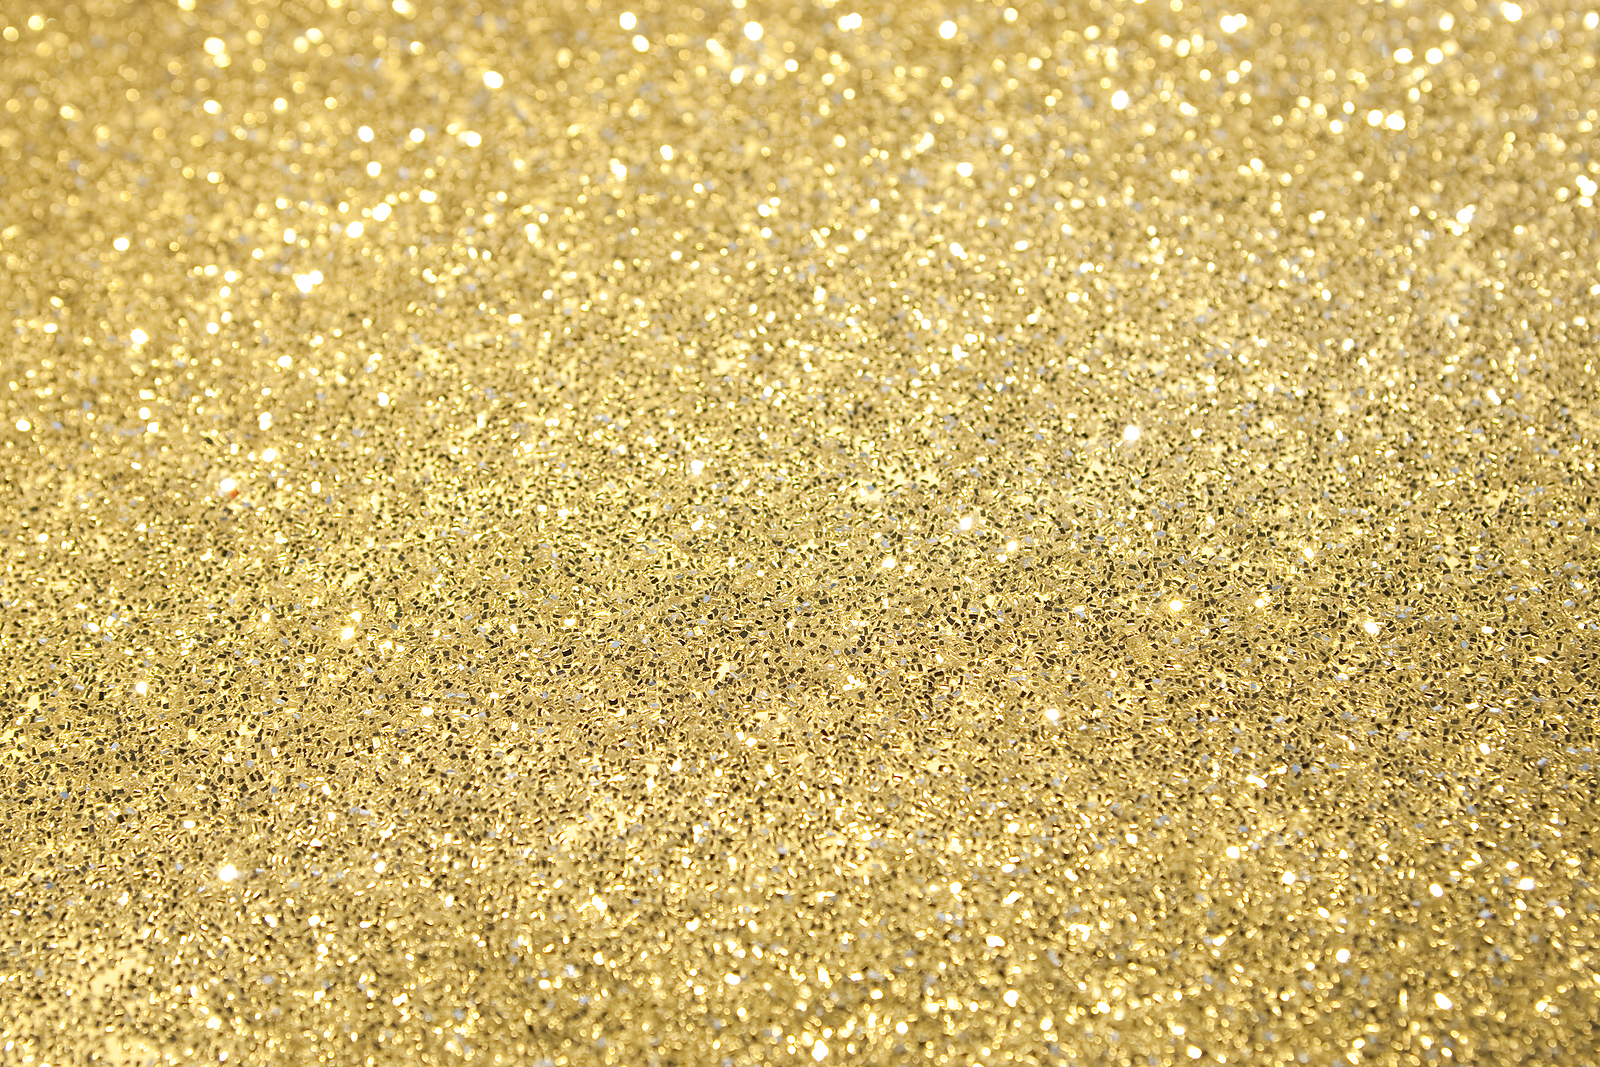 Bigstock Gold Glitter Selective Focus Jpg Theurbanrealist